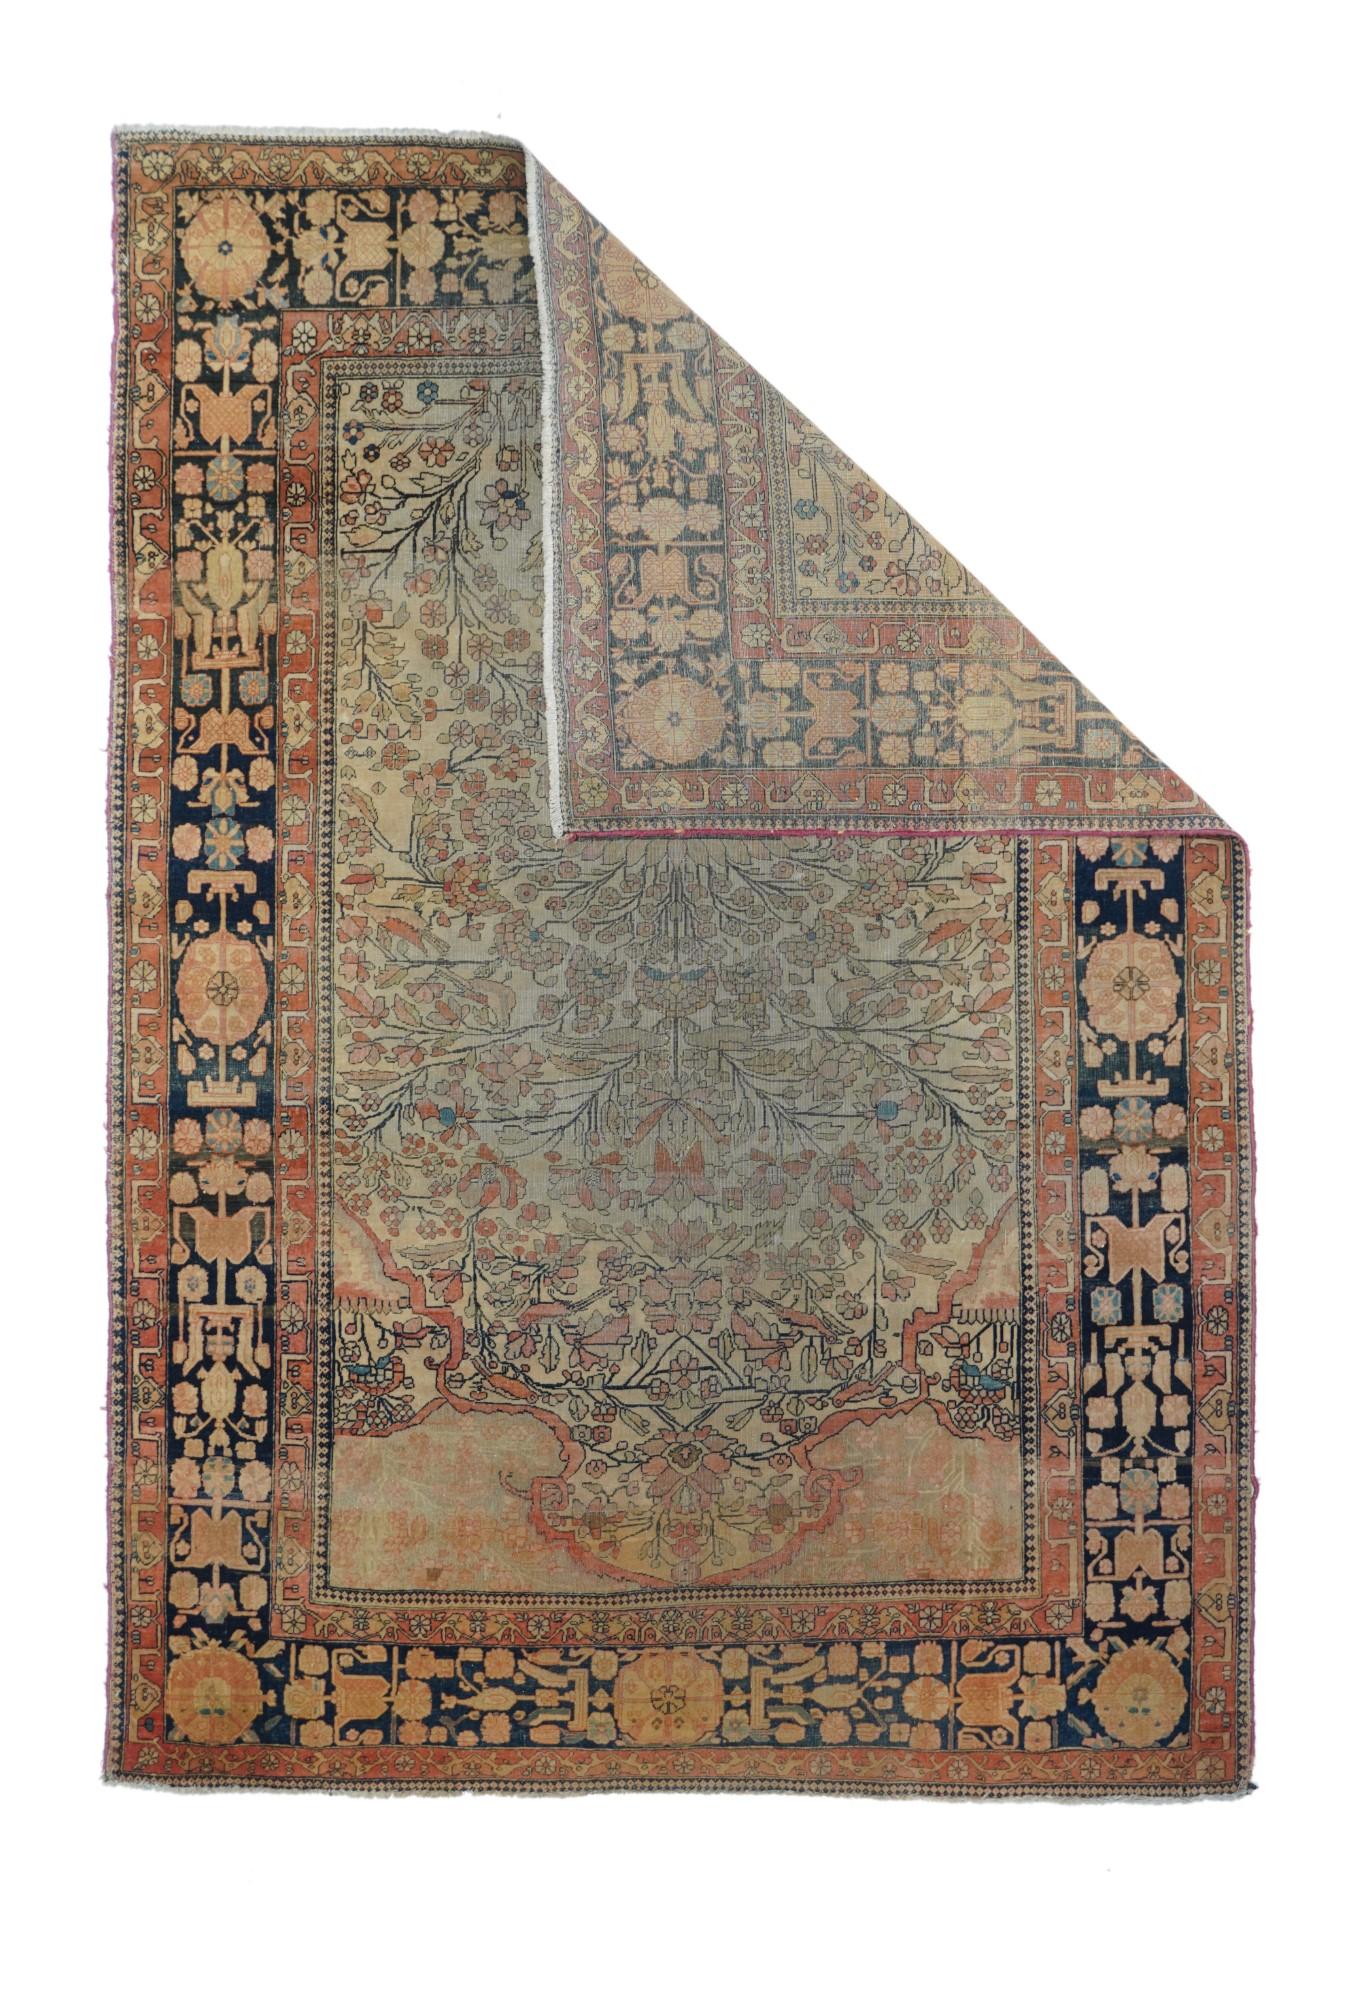 Antique Mohtasham Kashan rug circa 1880 measures: 4'6'' x 6'6''.